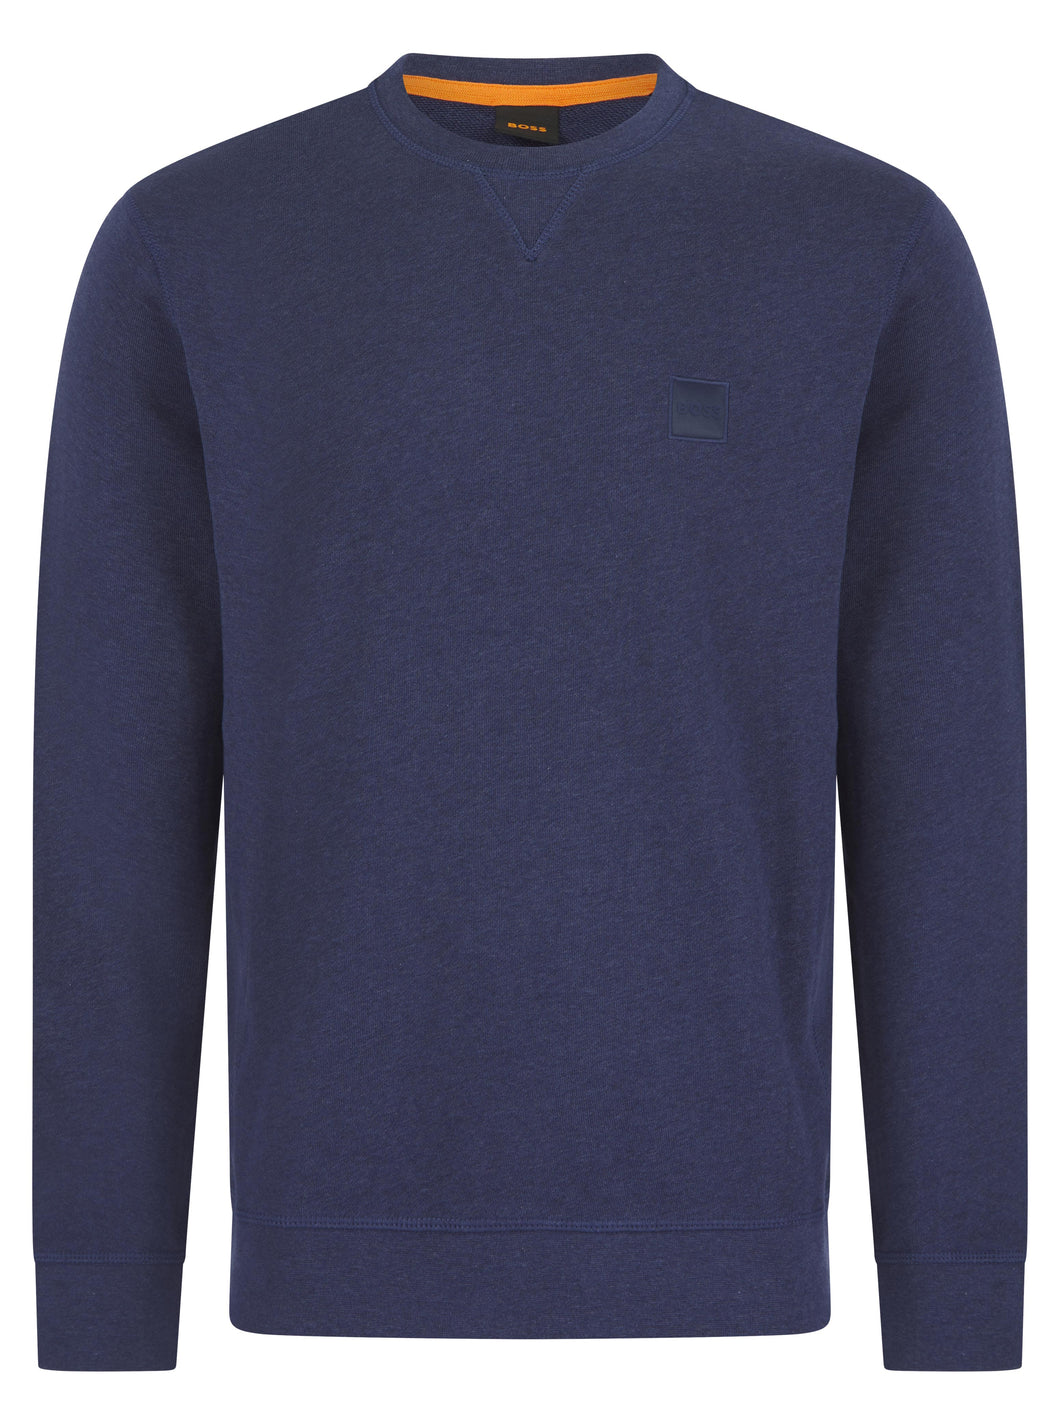 Hugo Boss Westart Navy Sweatshirt